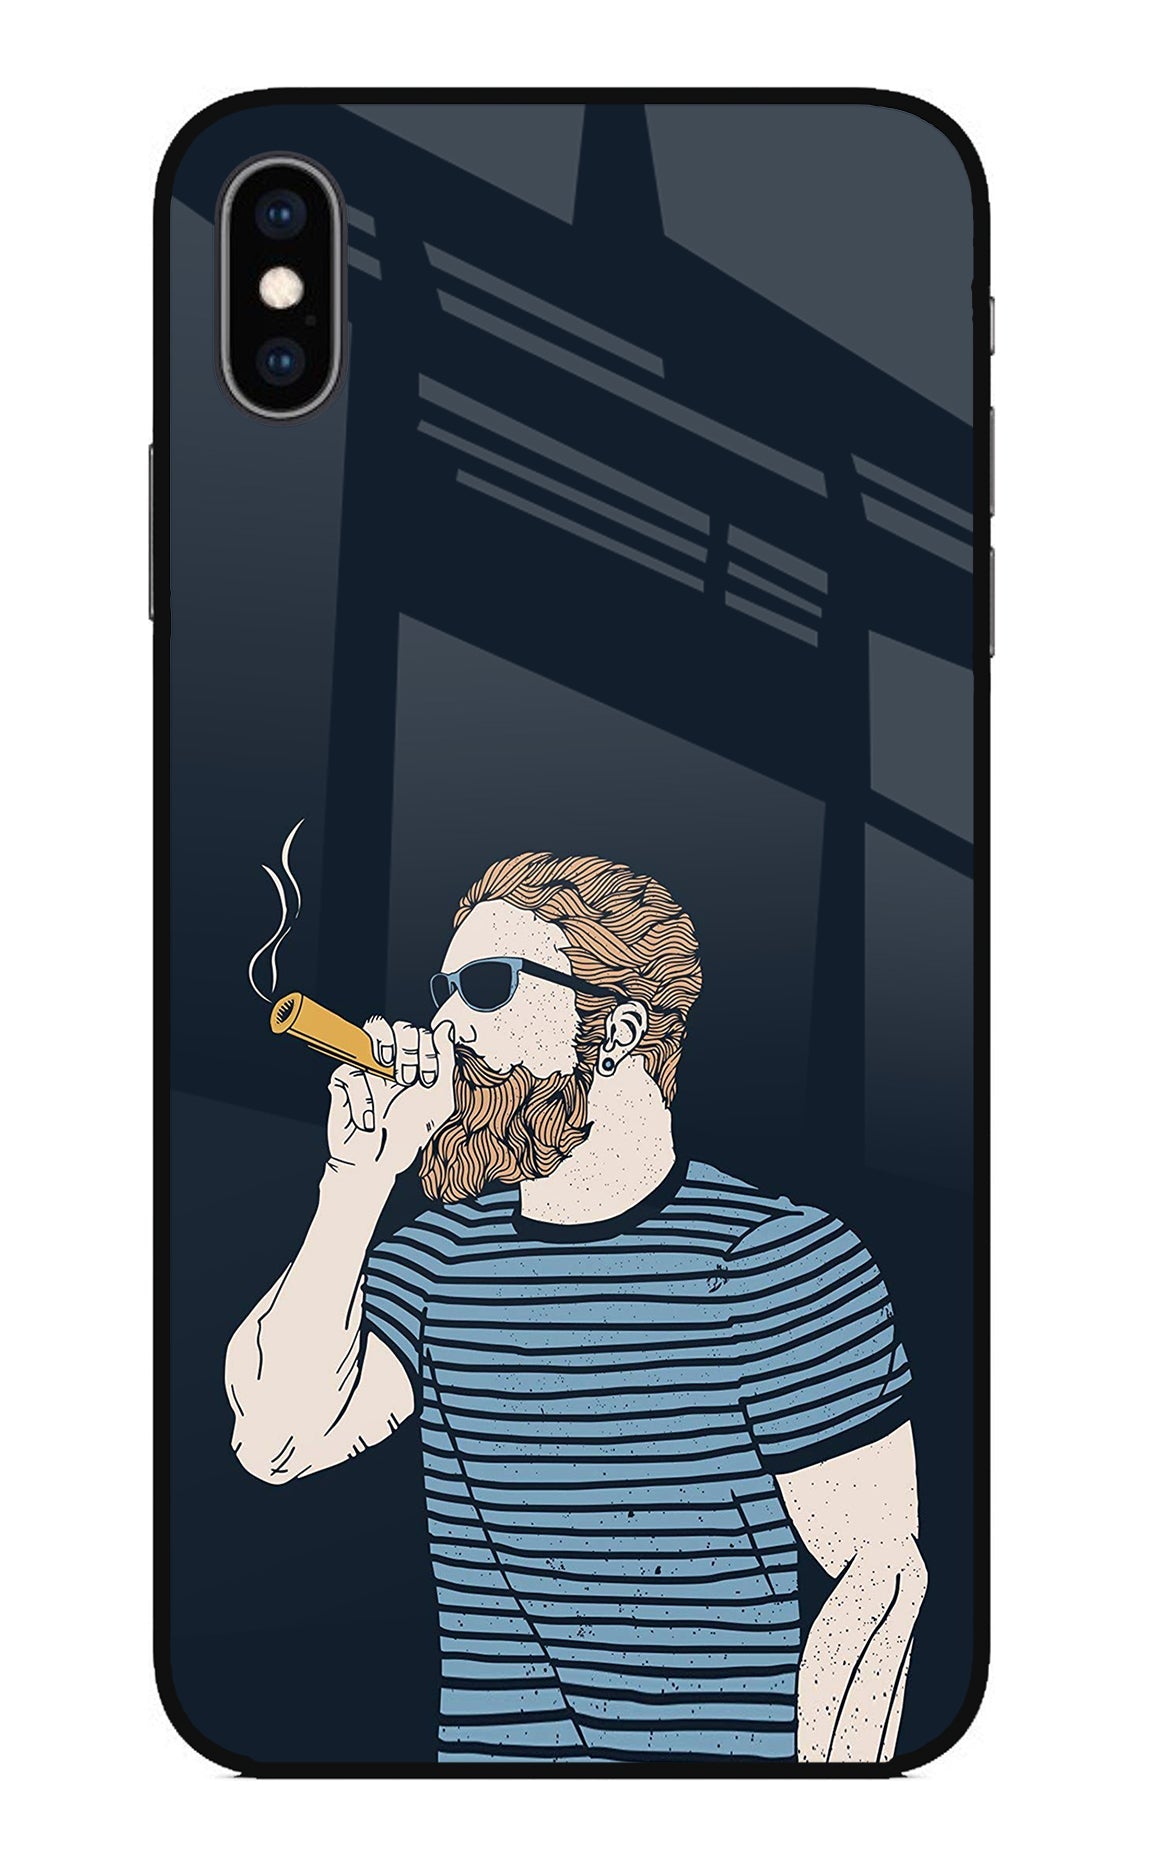 Smoking iPhone XS Max Glass Case